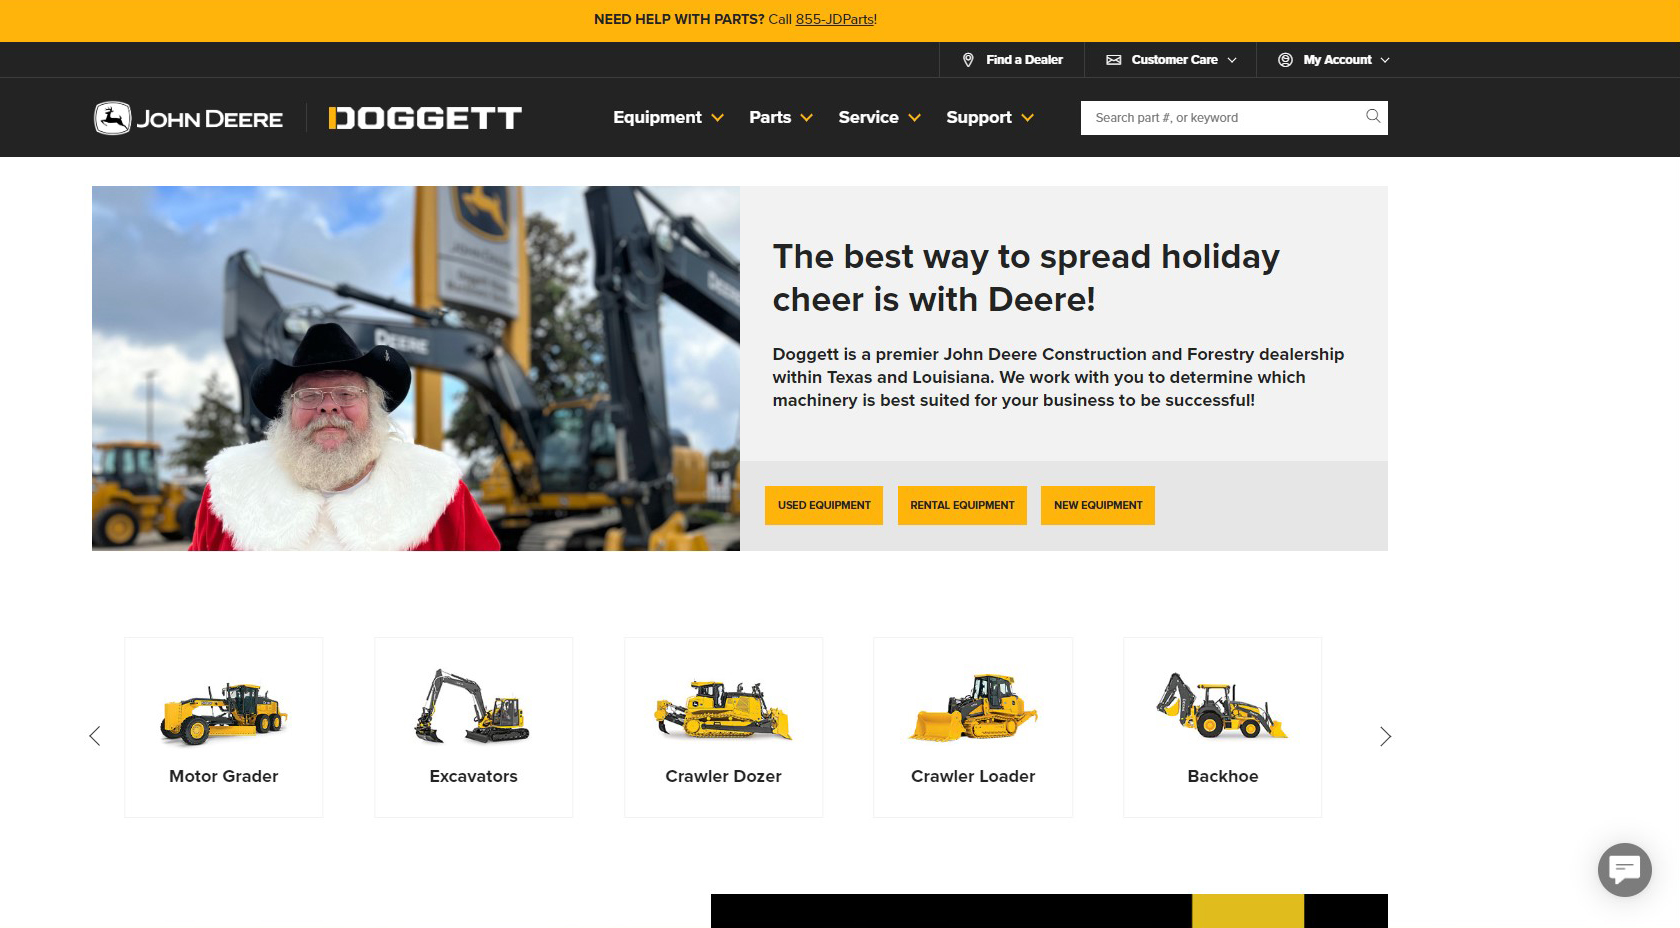 doggettequipment.com - John Deere Heavy Construction Equipment Sales in Texas and Louisiana